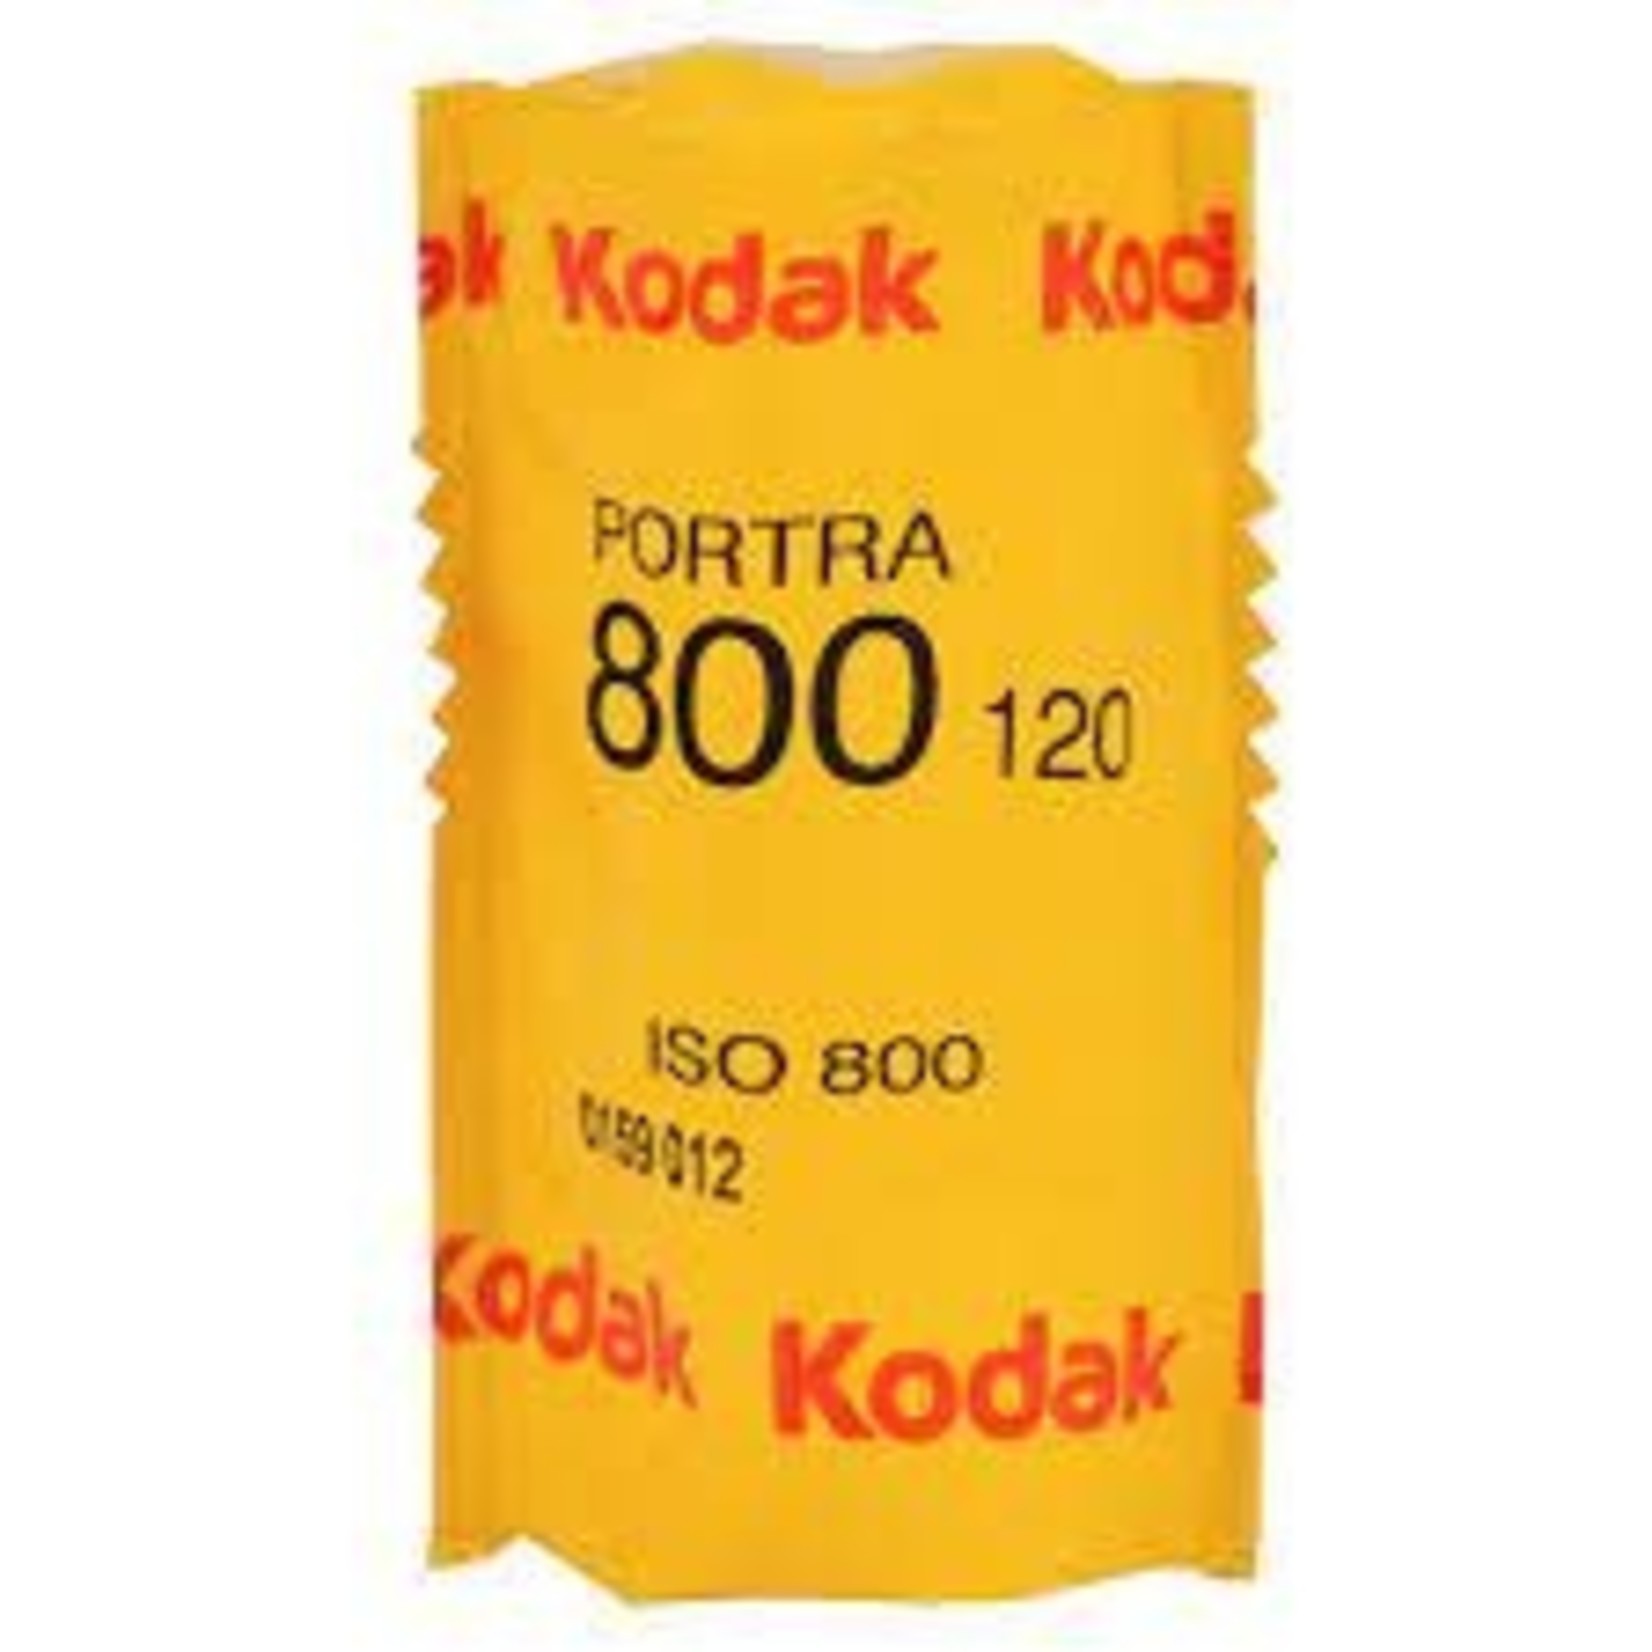 Kodak Kodak Portra 800 120 - Single Roll